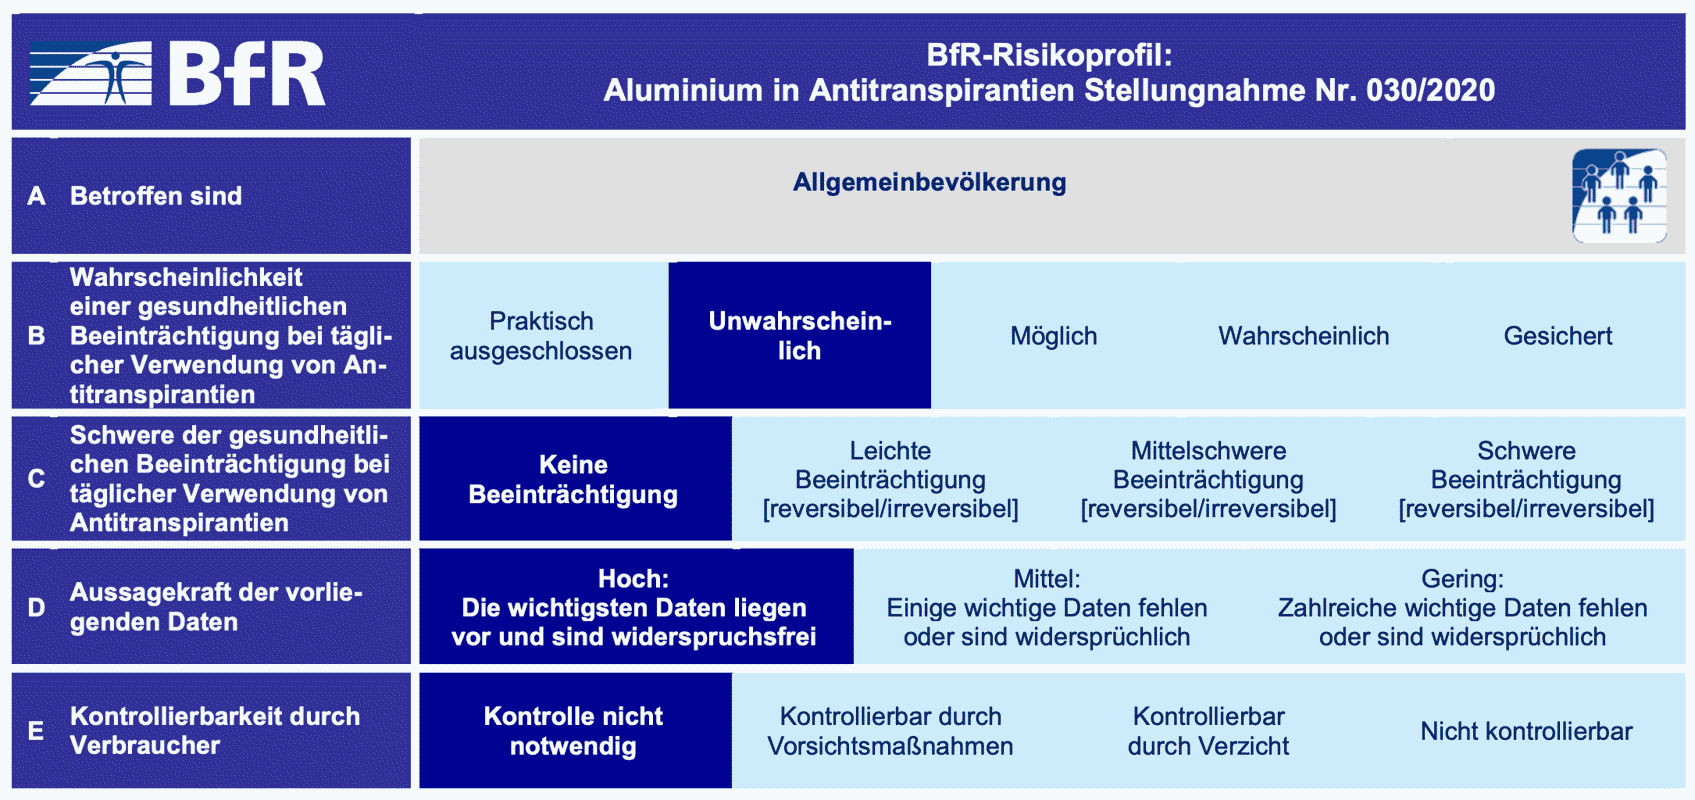 226302_2_2020-07-20 BfR - Gesamtbewertung - Aluminiumhaltige Antitranspirantien.png